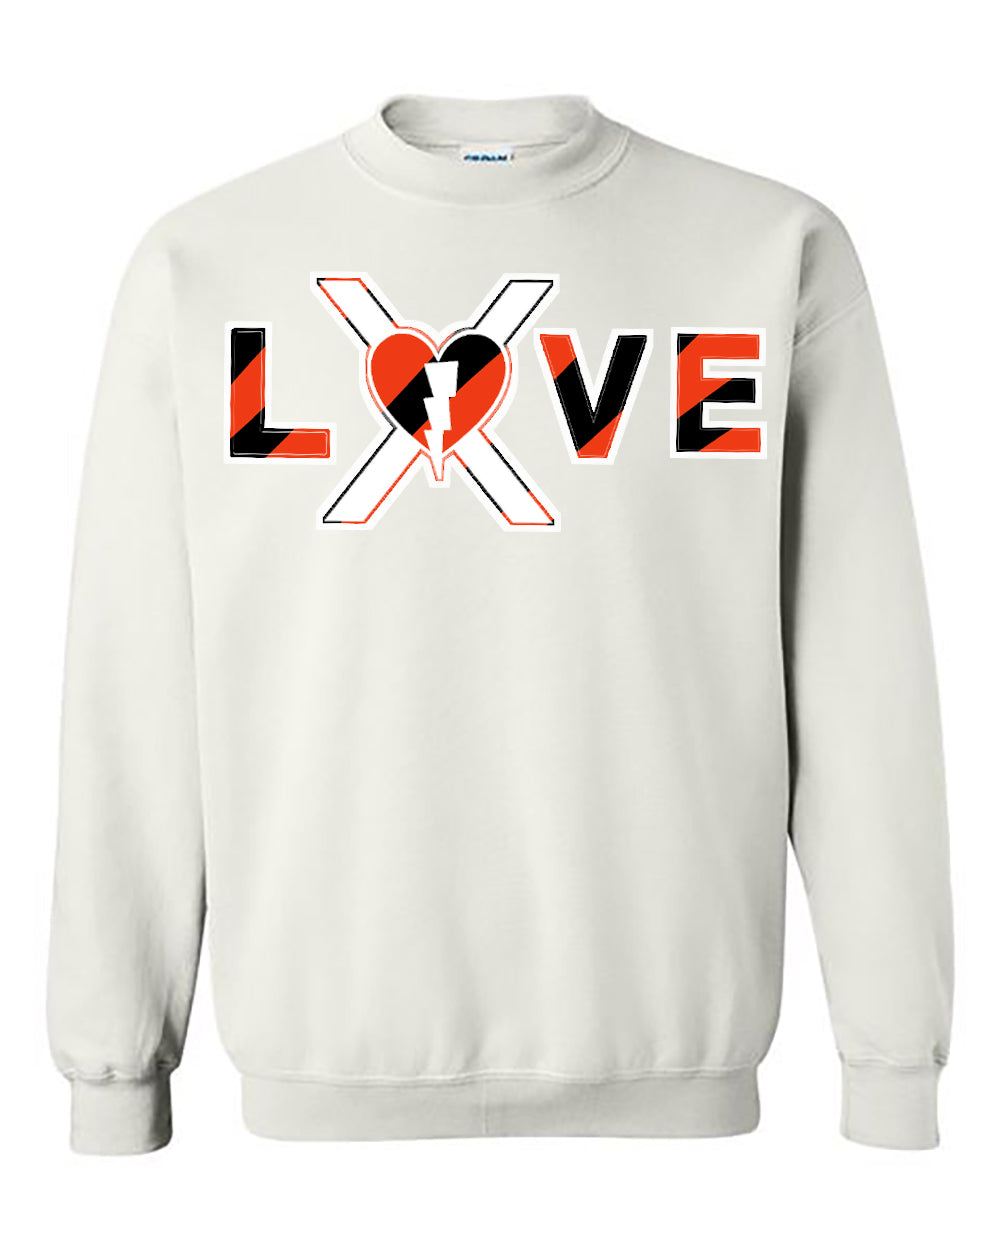 Live X Love Sweatshirt (Bengal)